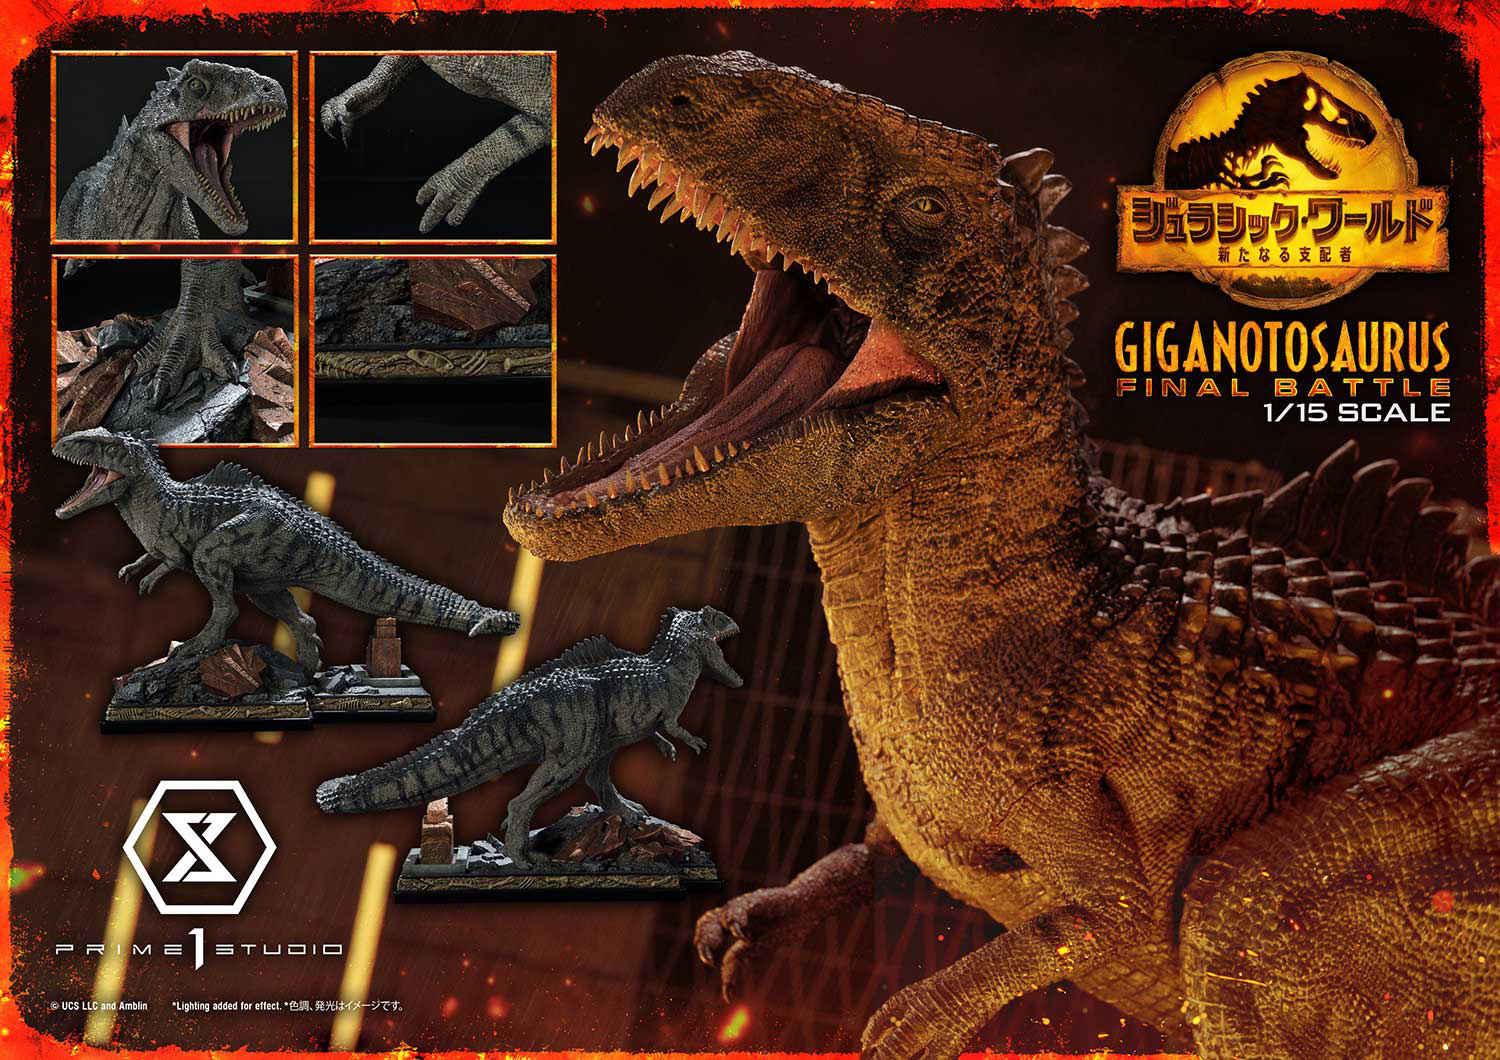 Legacy Museum Collection Jurassic World (Film) Indominus Rex 1/15 scale  Bonus Version